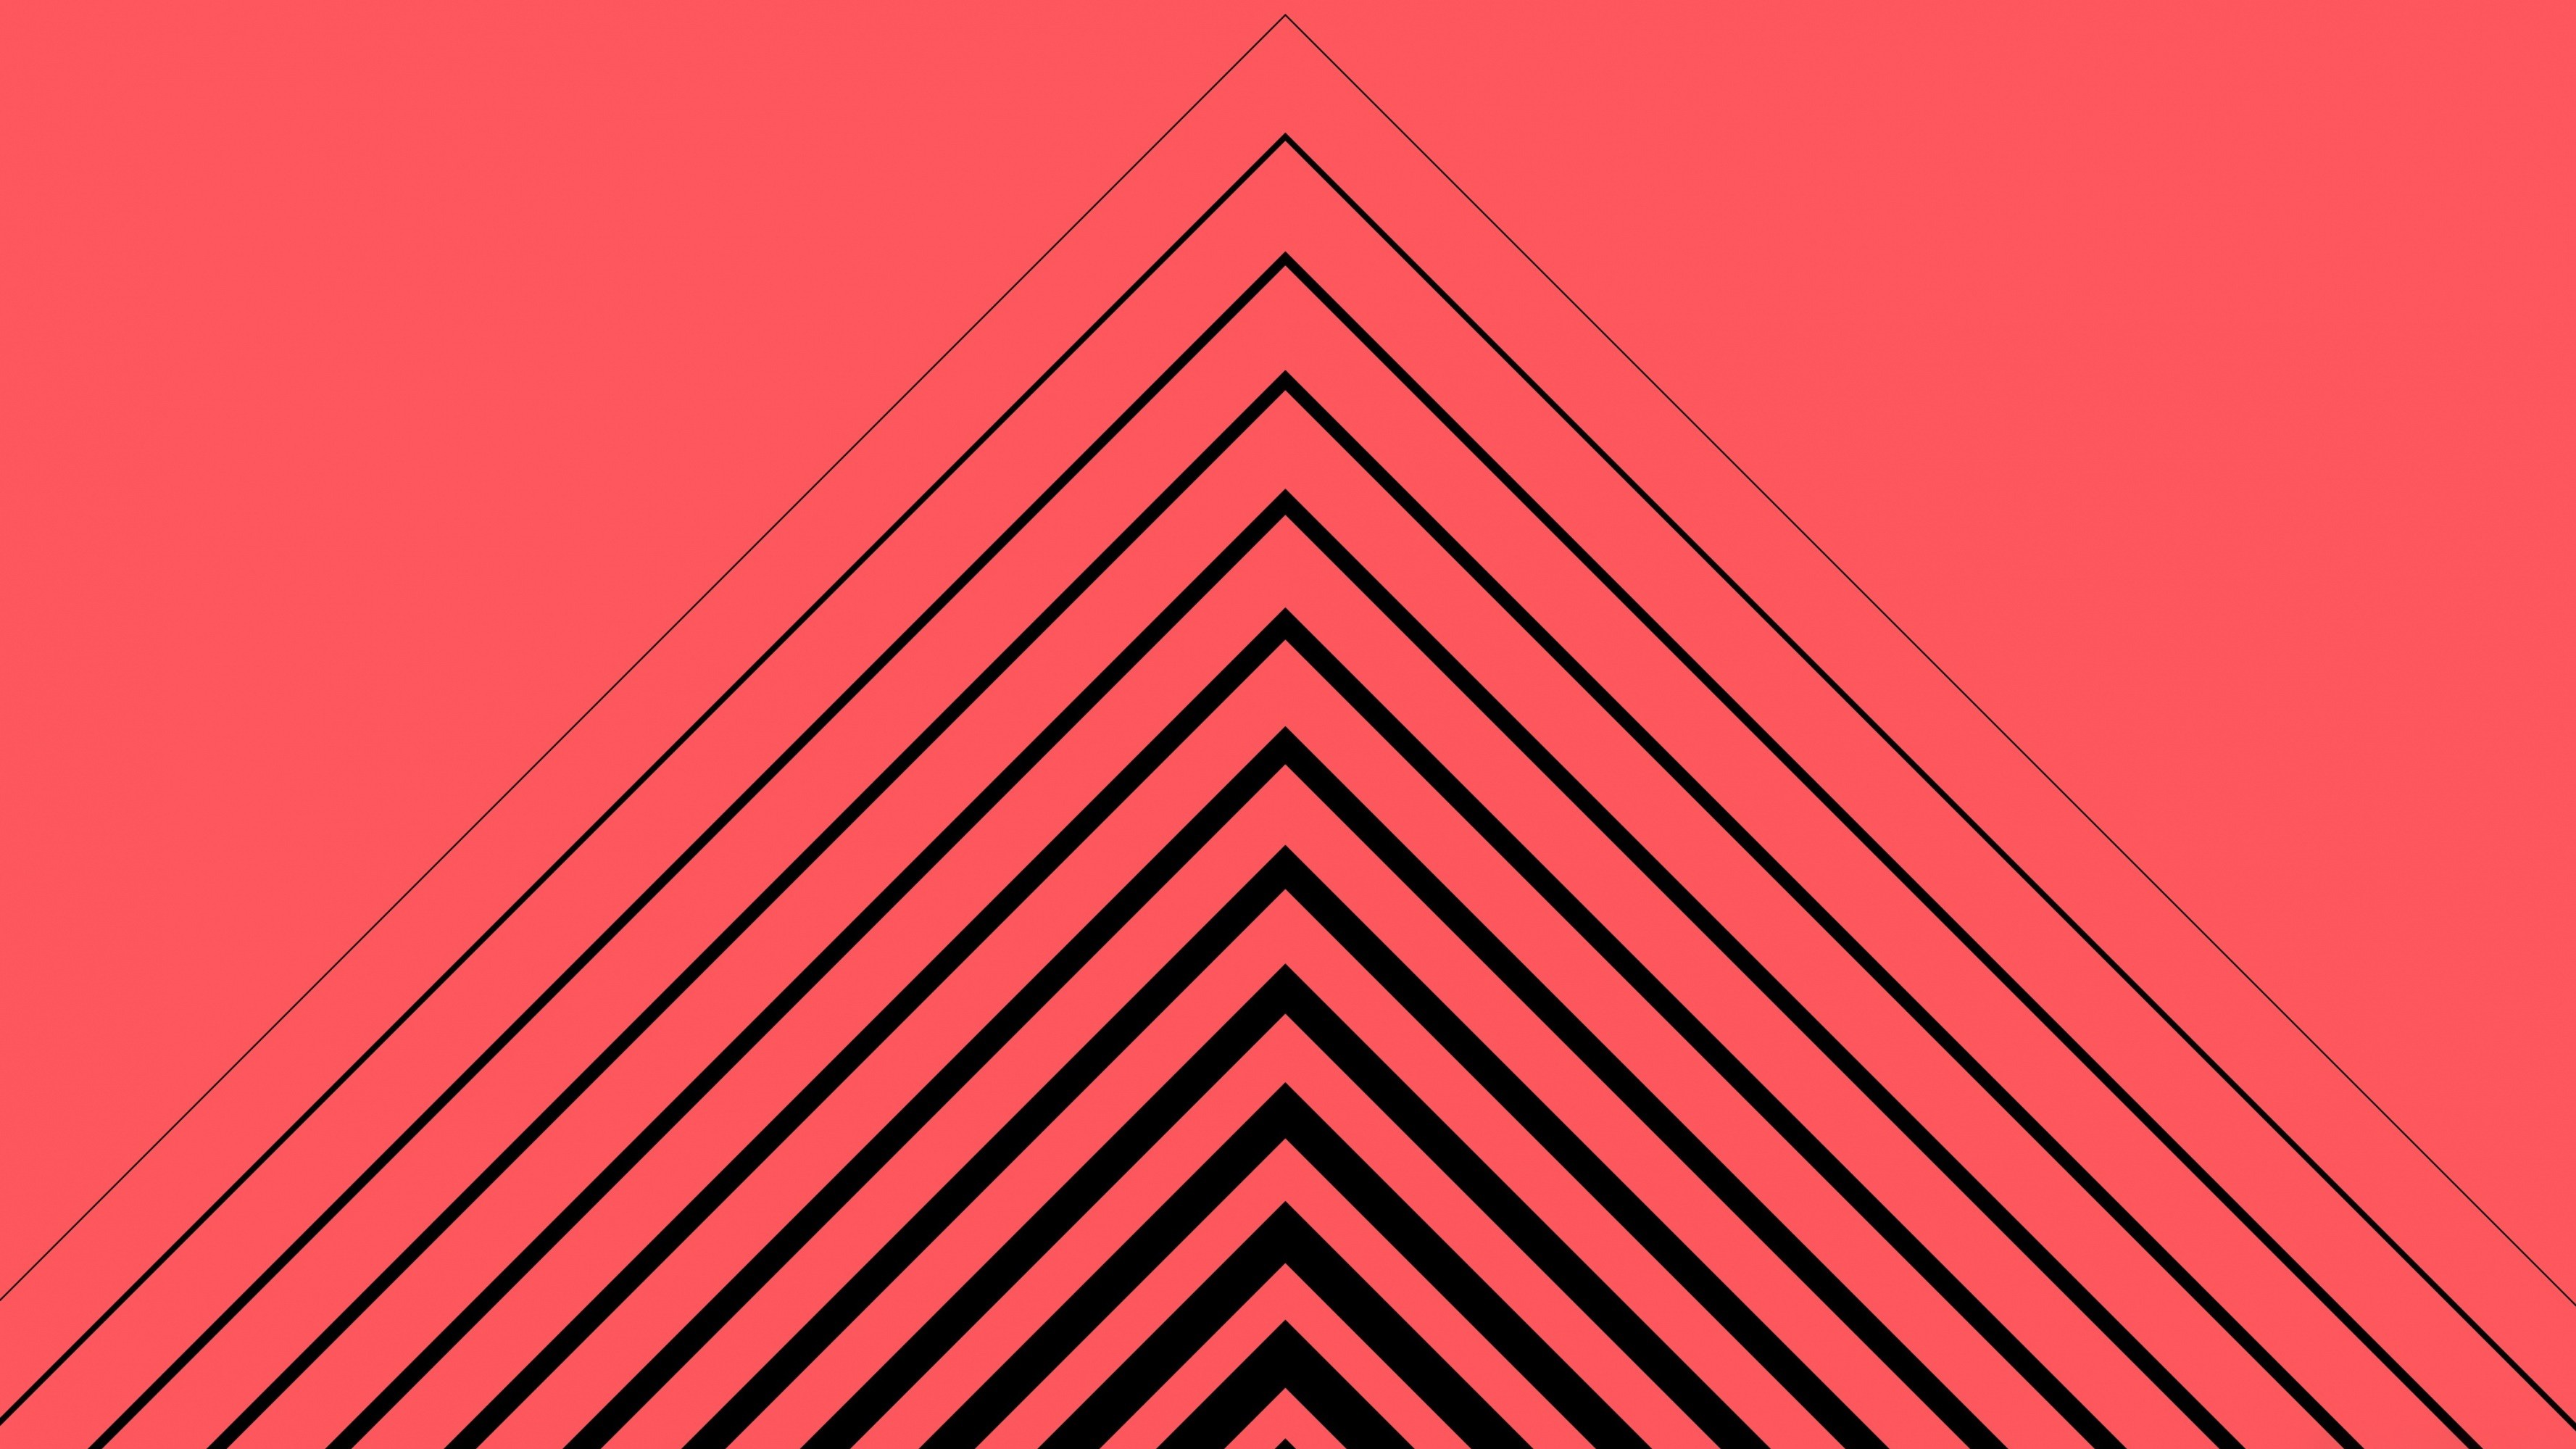 General 3554x1999 minimalism triangle geometry digital art simple background red background